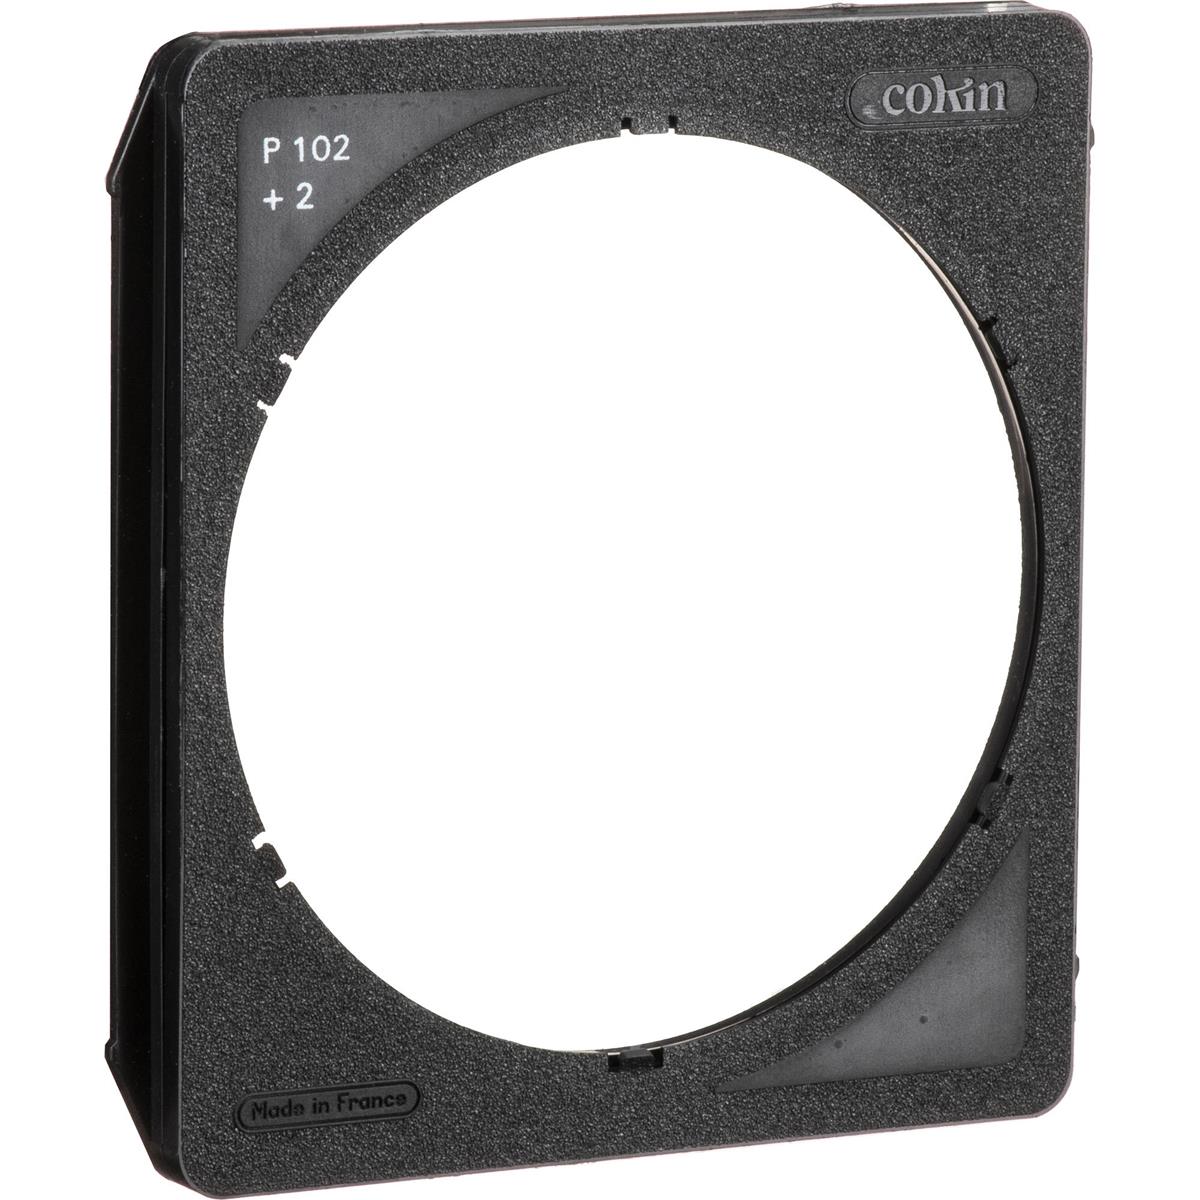 Image of Cokin P102 Close Up +2 Filter